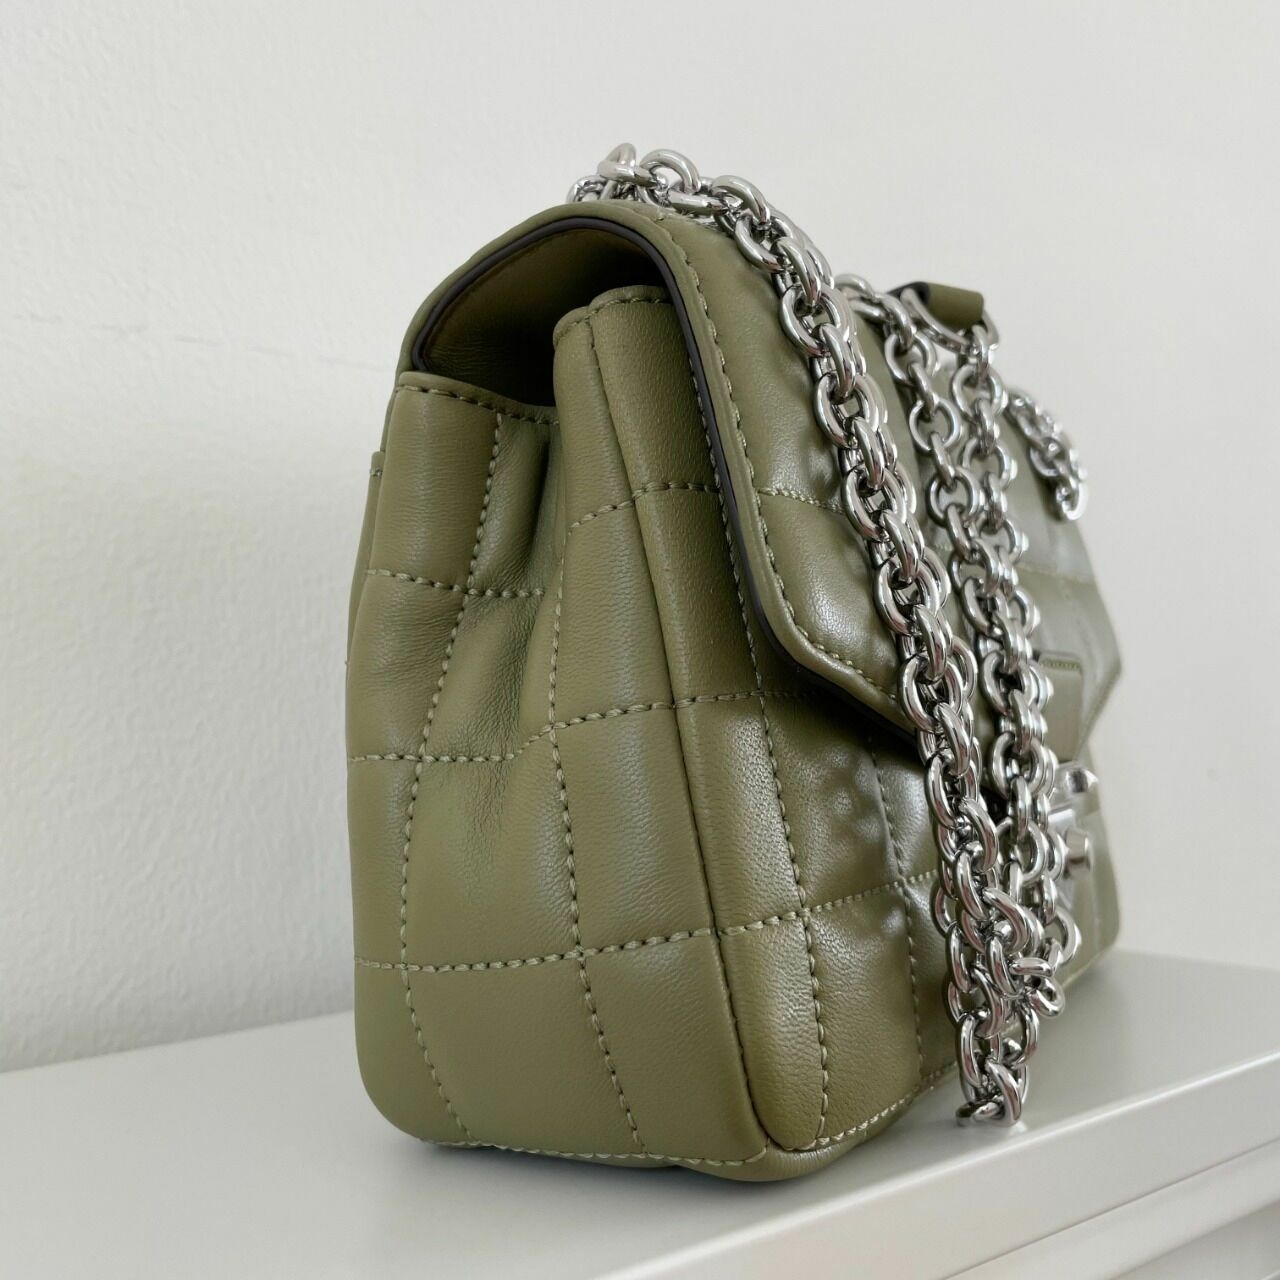 Michael Kors SoHo Quilted Handbag - Olive